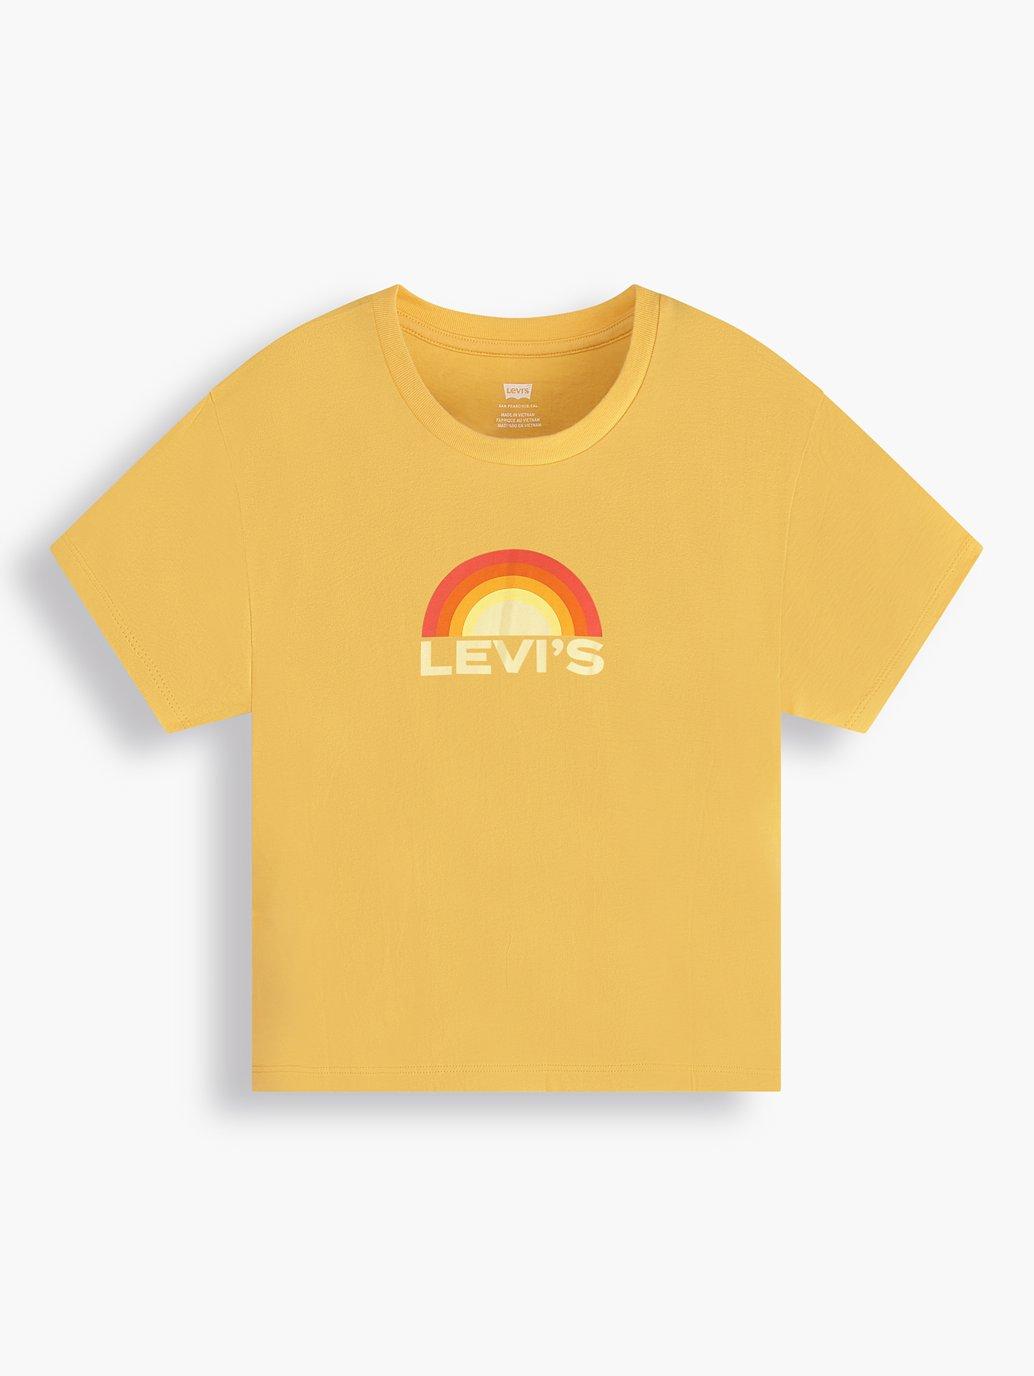 Levi's® Hong Kong womens cropped jordie t shirt A07850030 19 Details